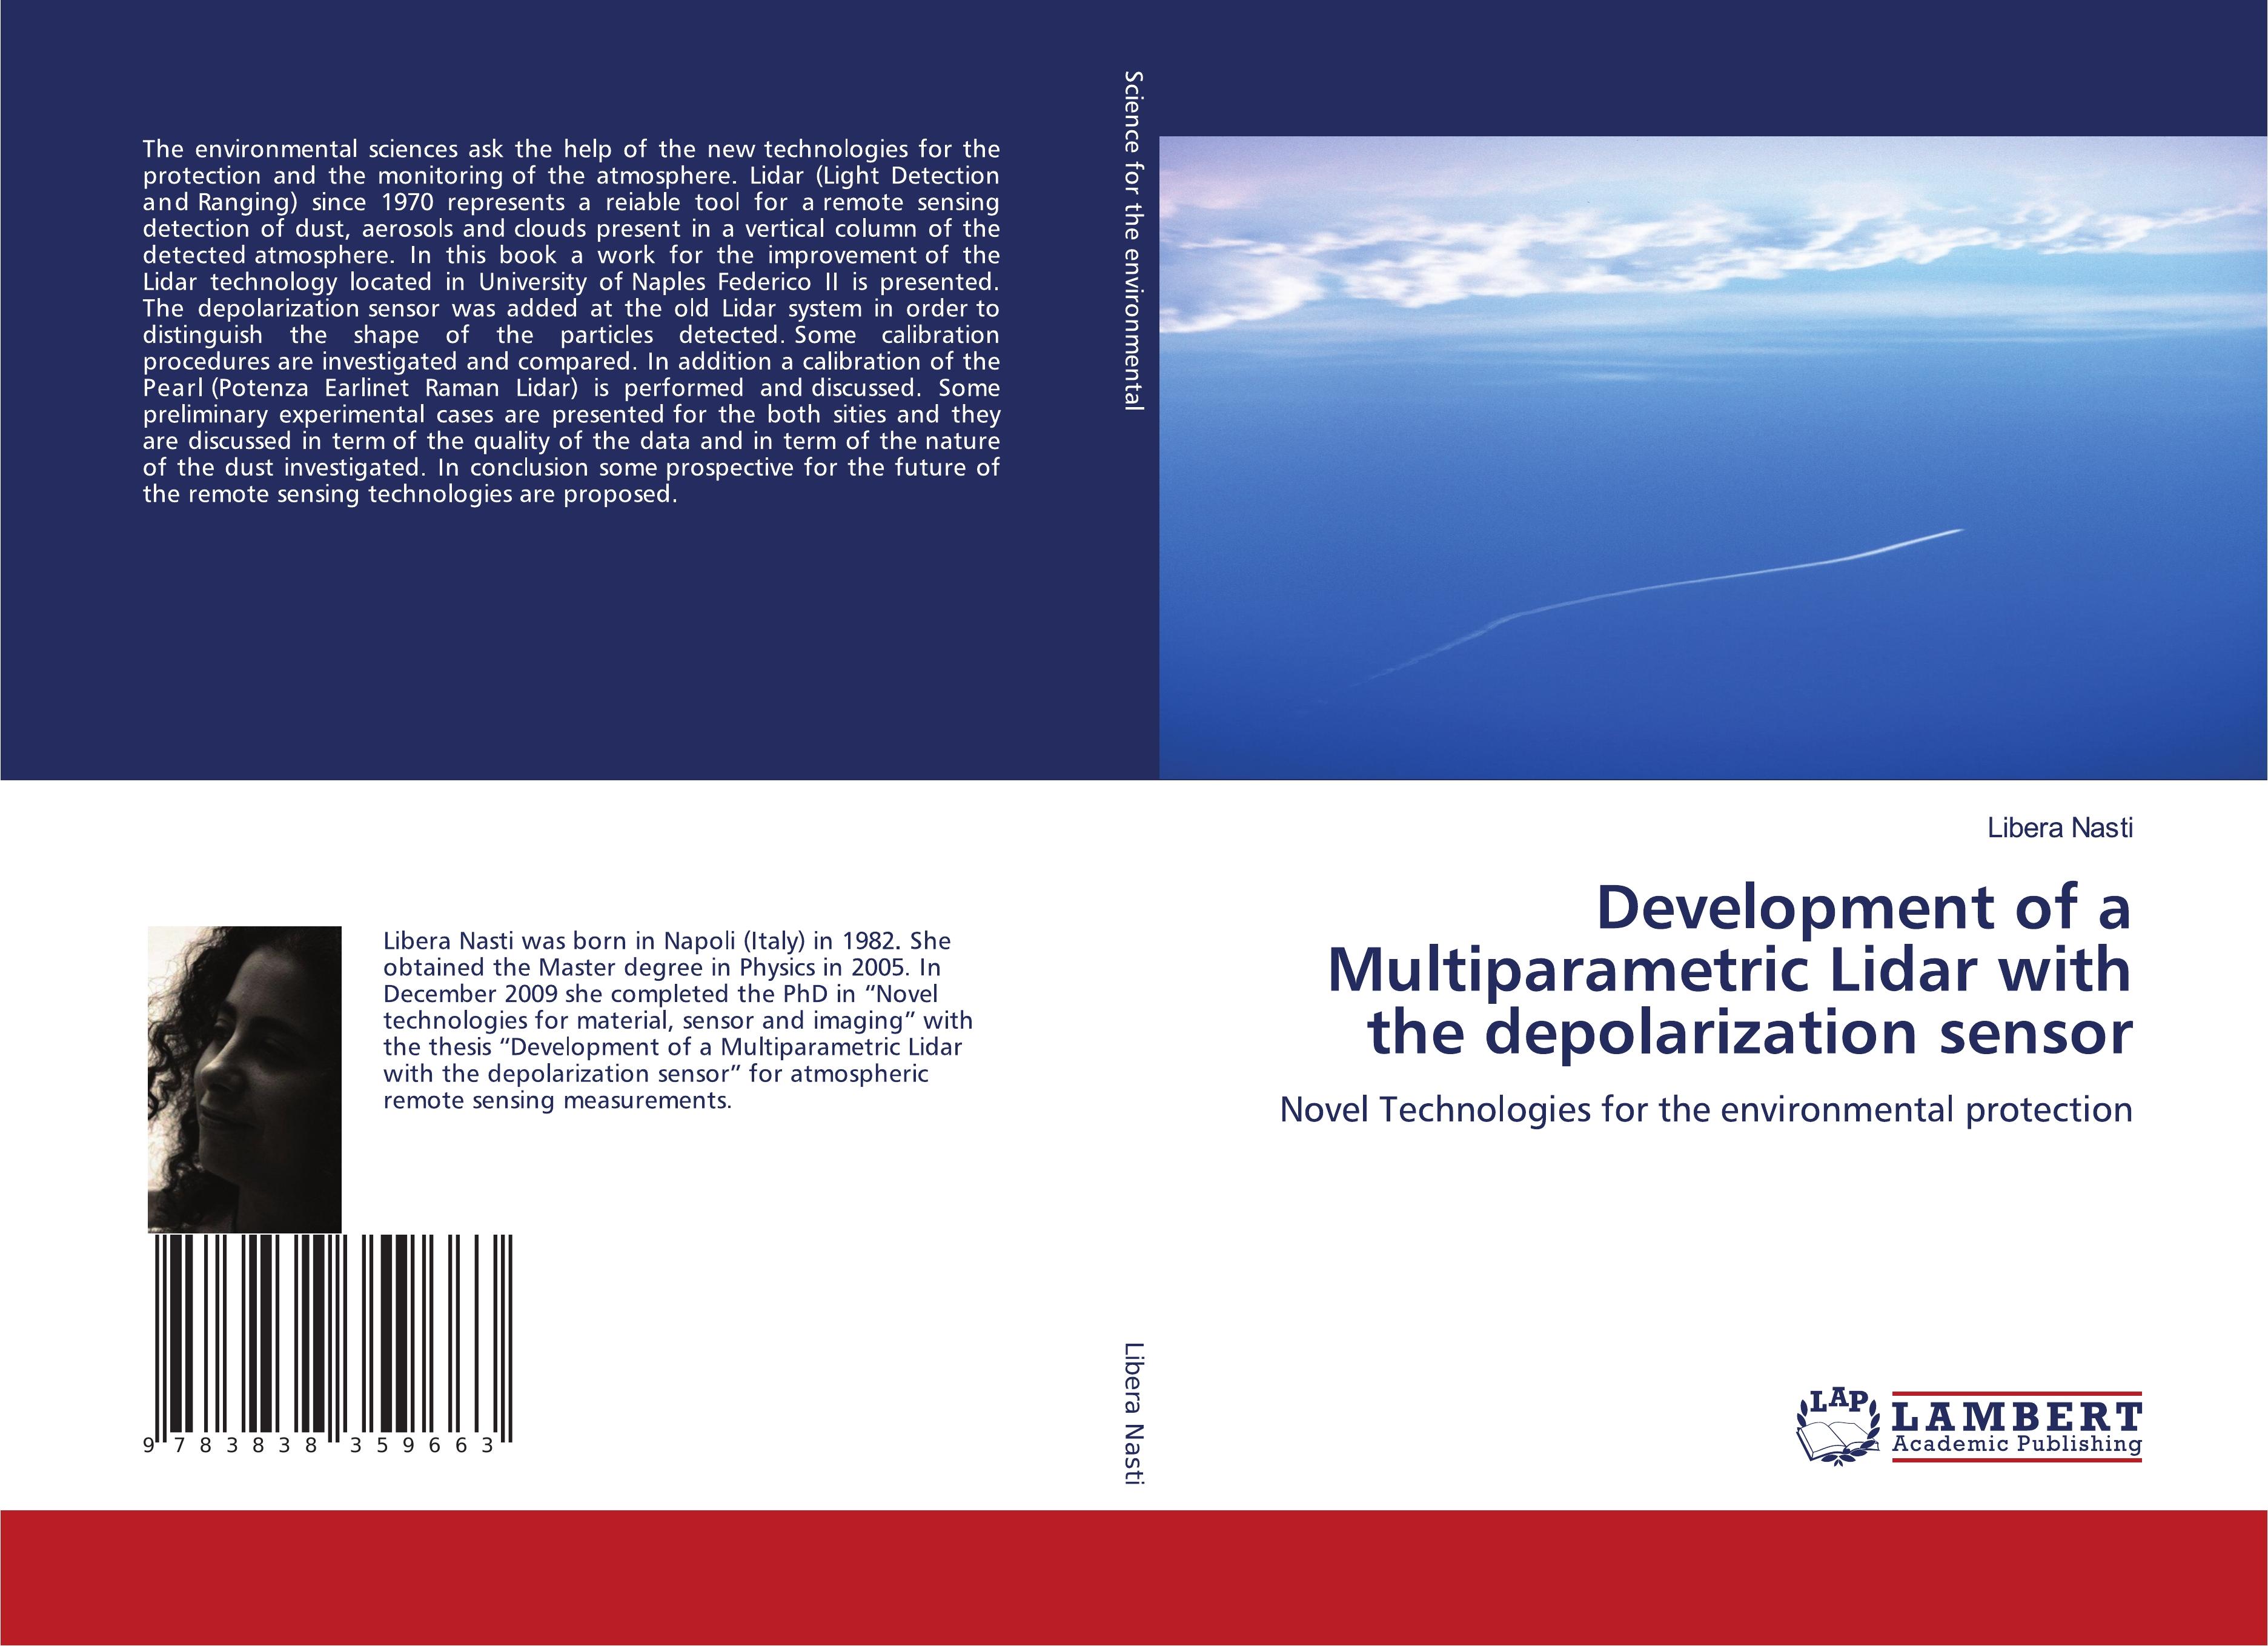 Development of a Multiparametric Lidar with the depolarization sensor - Libera Nasti